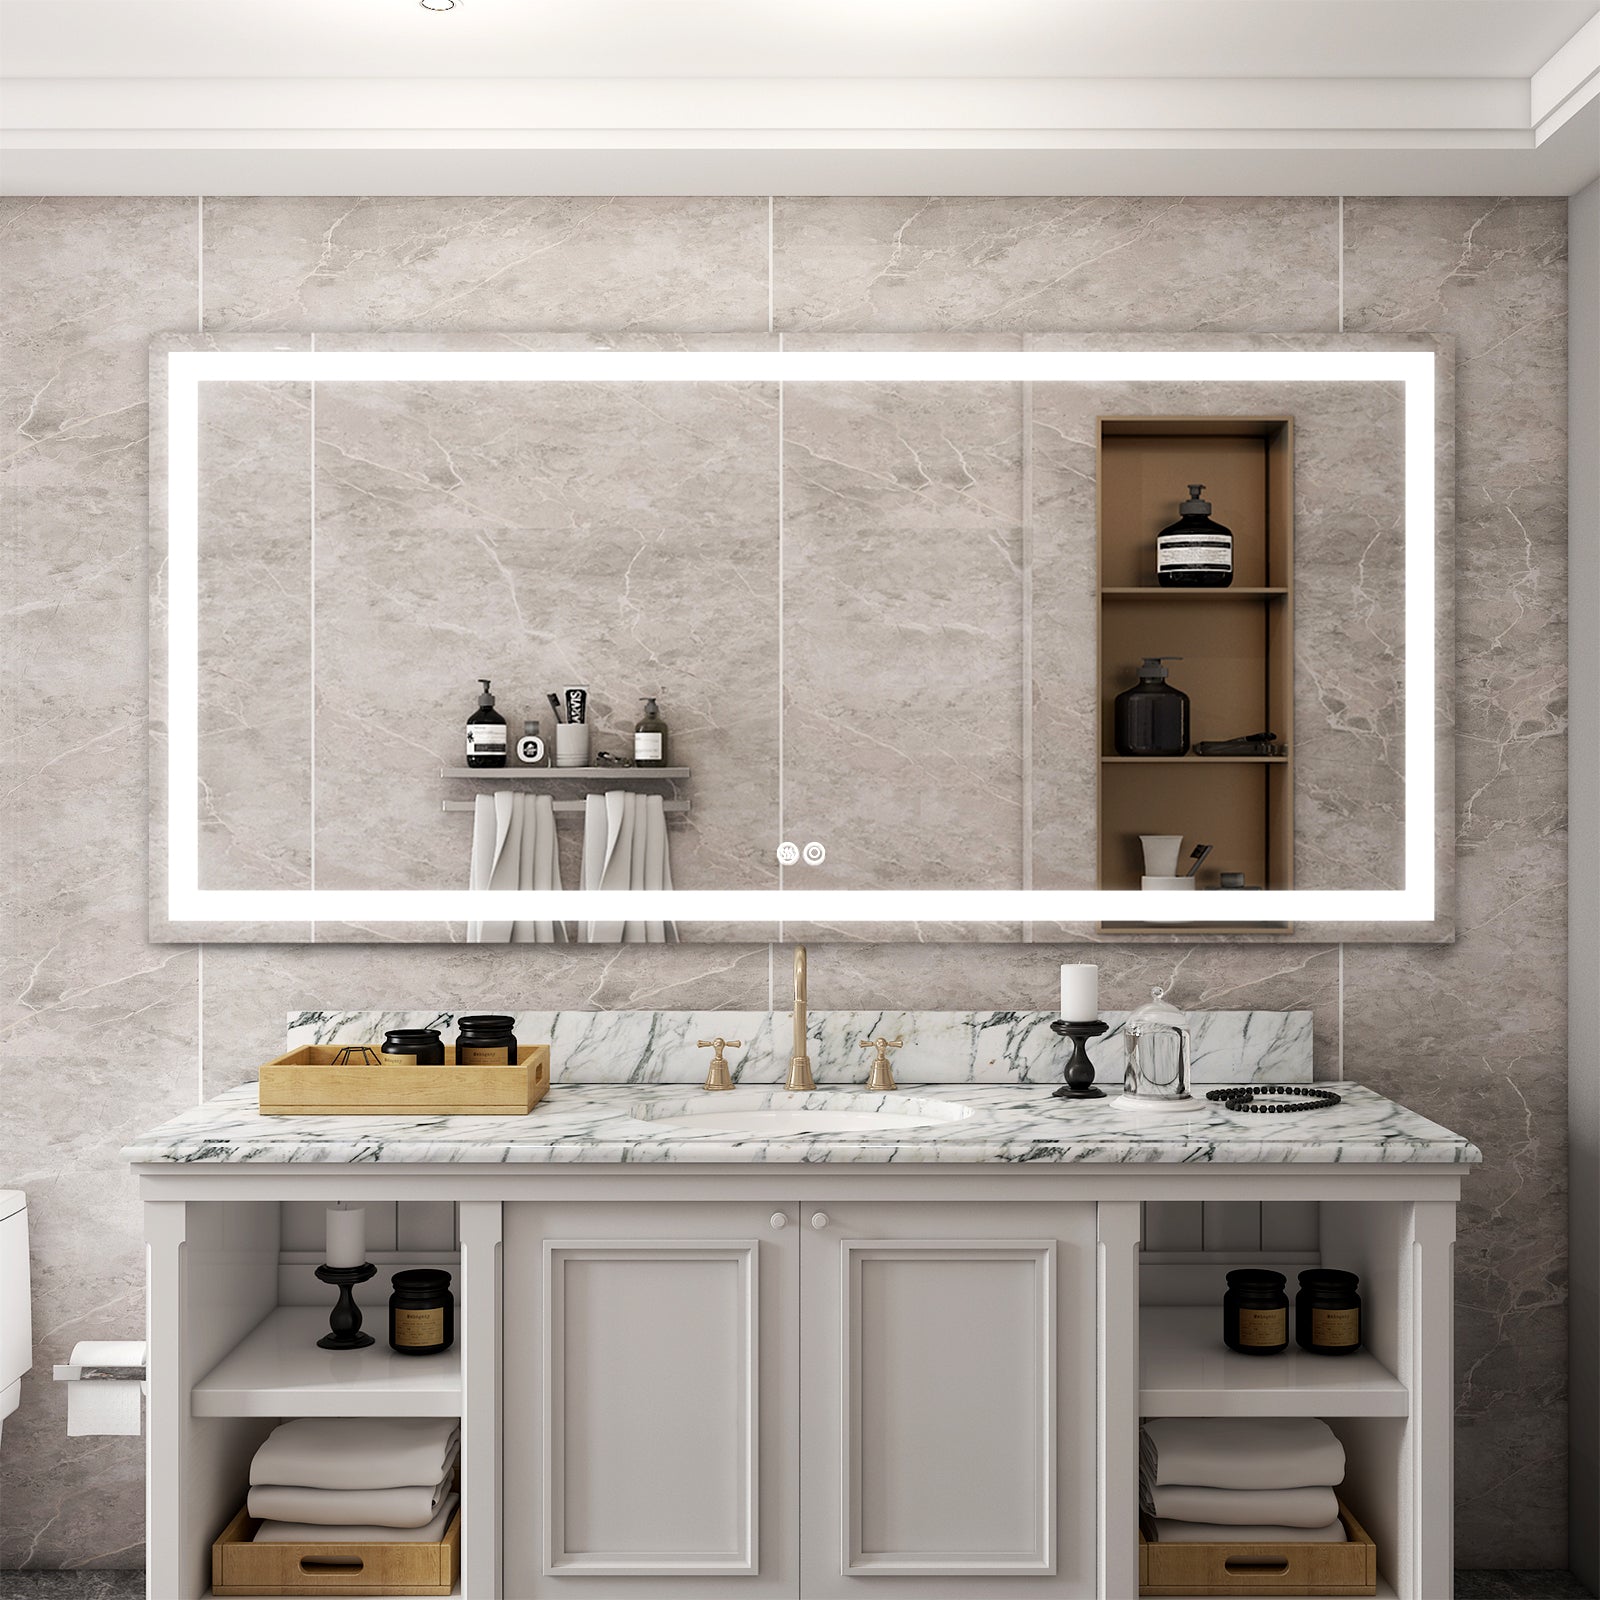 72 in. W x 36 in. H Rectangular Frameless Anti-Fog LED Light Bathroom Vanity Mirror in Aluminum-Arrisea